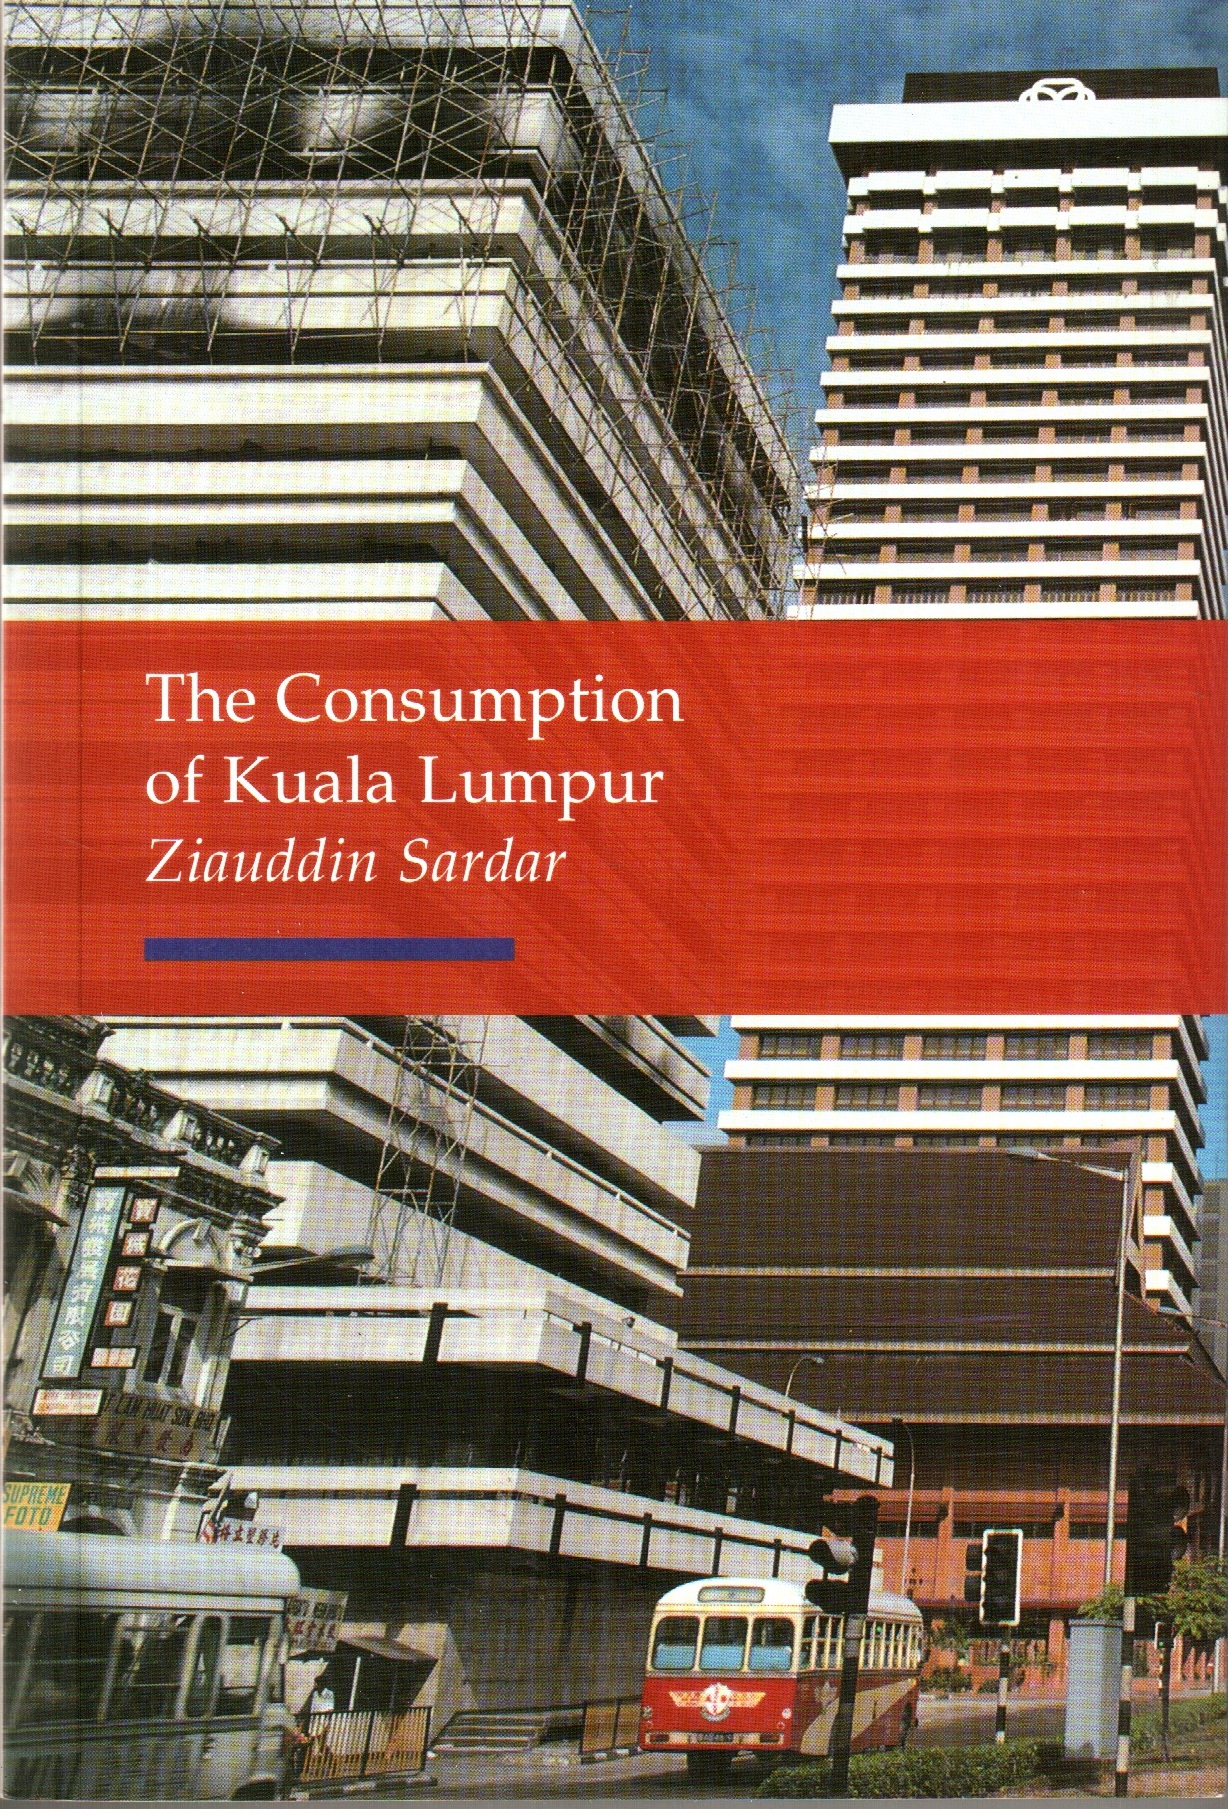 The Consumption of Kuala Lumpur - Ziauddin Sardar